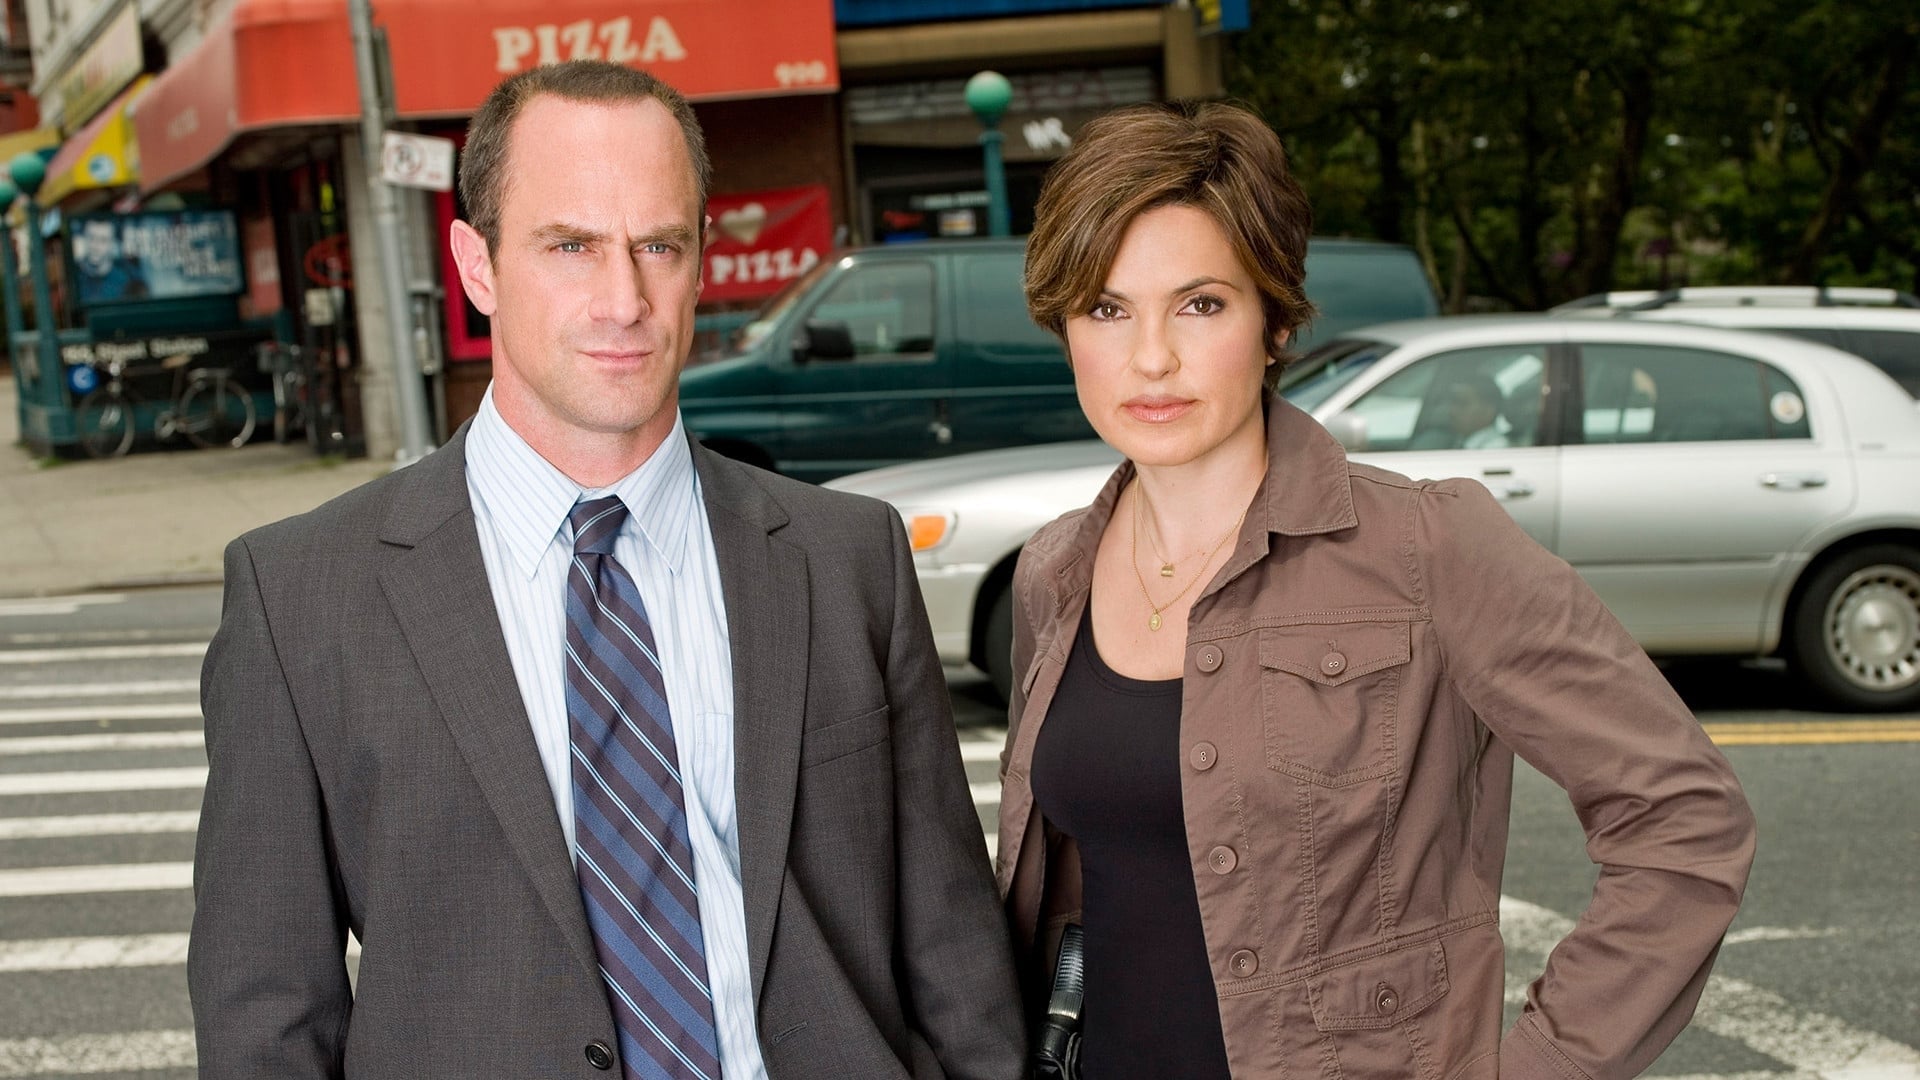 Law & Order: Special Victims Unit - Season 20